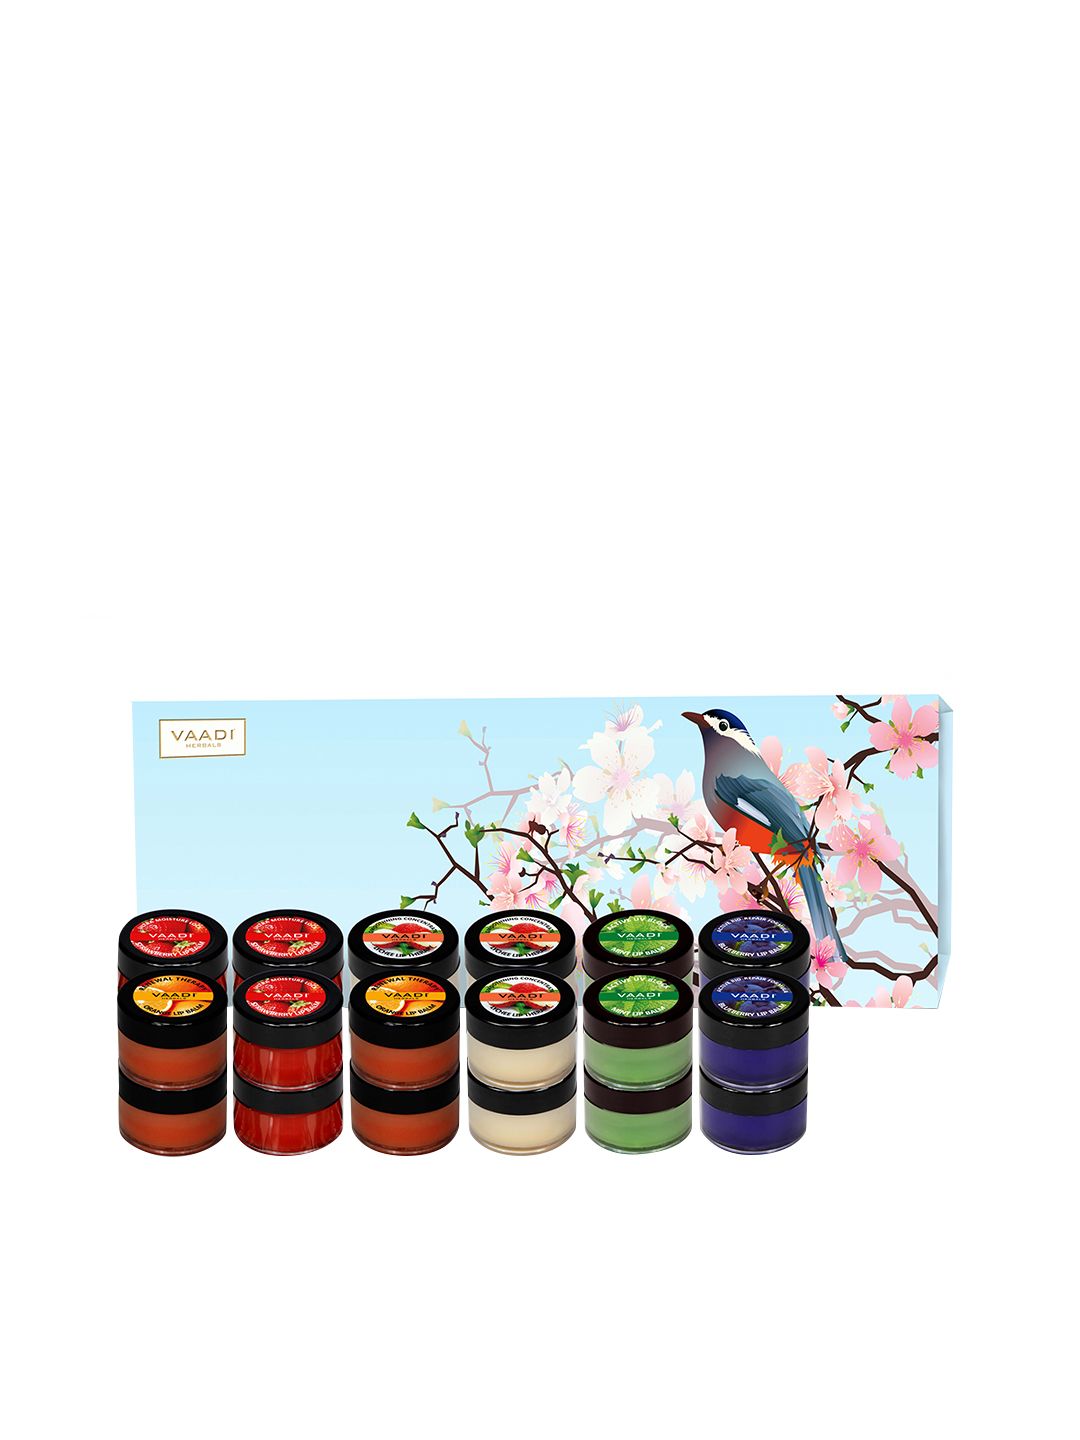 Vaadi Herbals Unisex Gift Box Of 24 Premium Lip Balm 10 g each Price in India